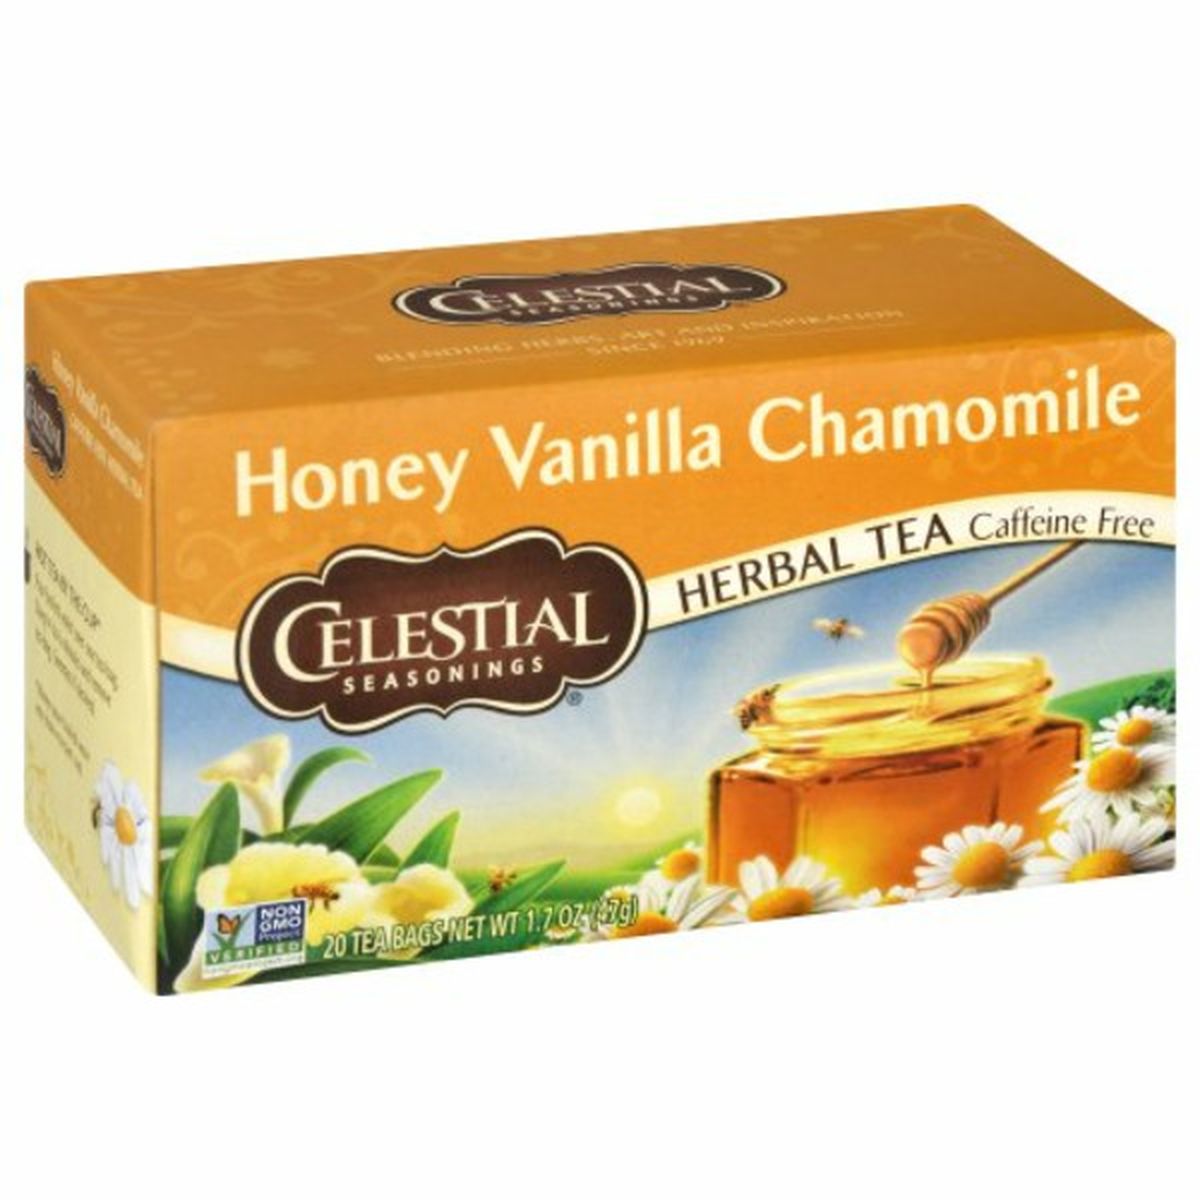 Calories in Celestial Seasonings Herbal Tea, Caffeine Free, Honey Vanilla Chamomile, Tea Bags